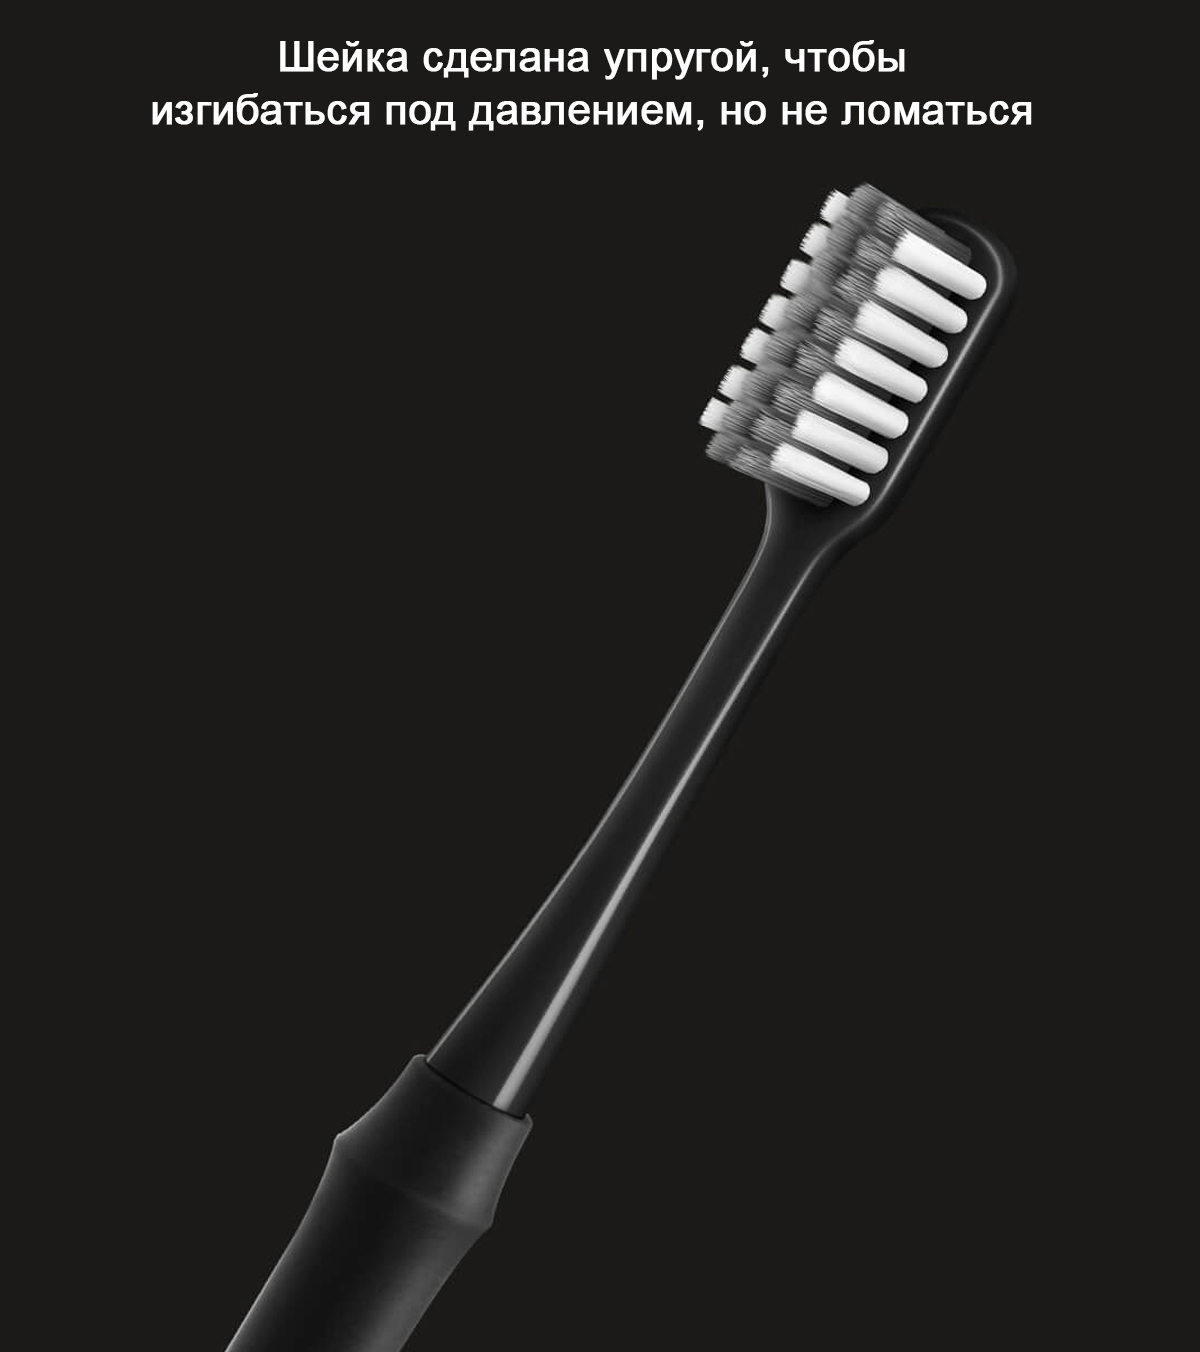 Набор зубных щеток DR.BEI Bass Toothbrush Bamboo Joint